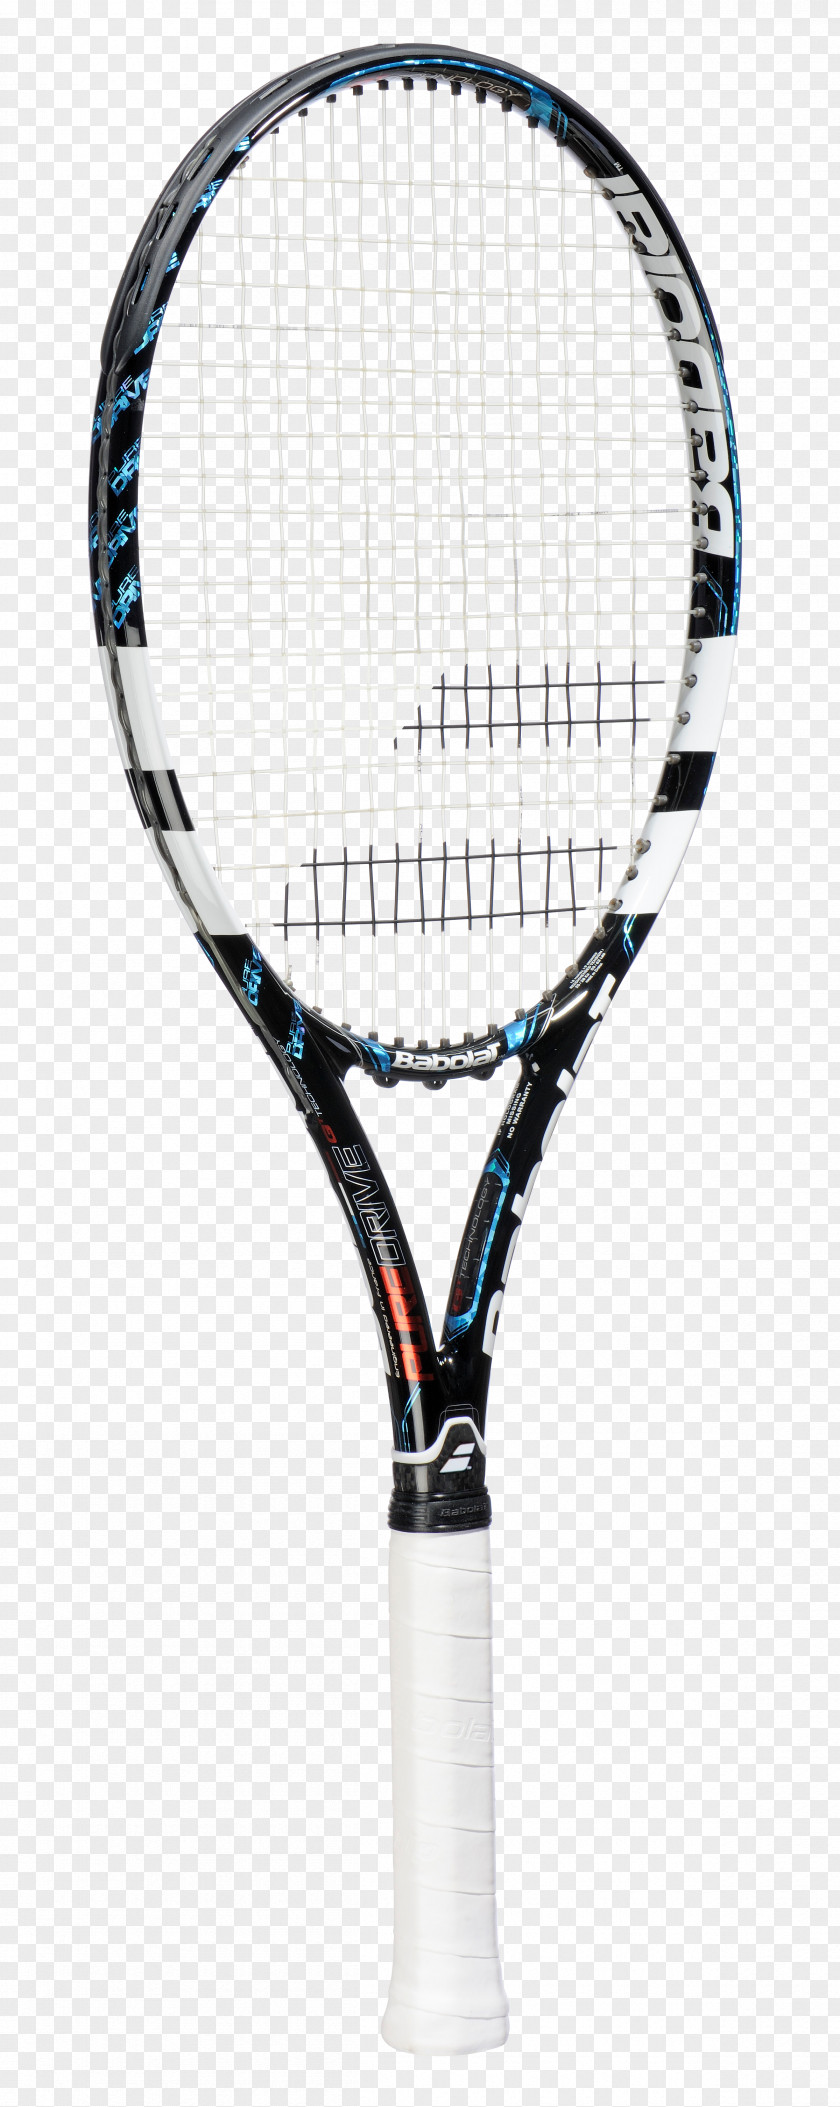 Tennis 2014 French Open Babolat Racket Rakieta Tenisowa PNG